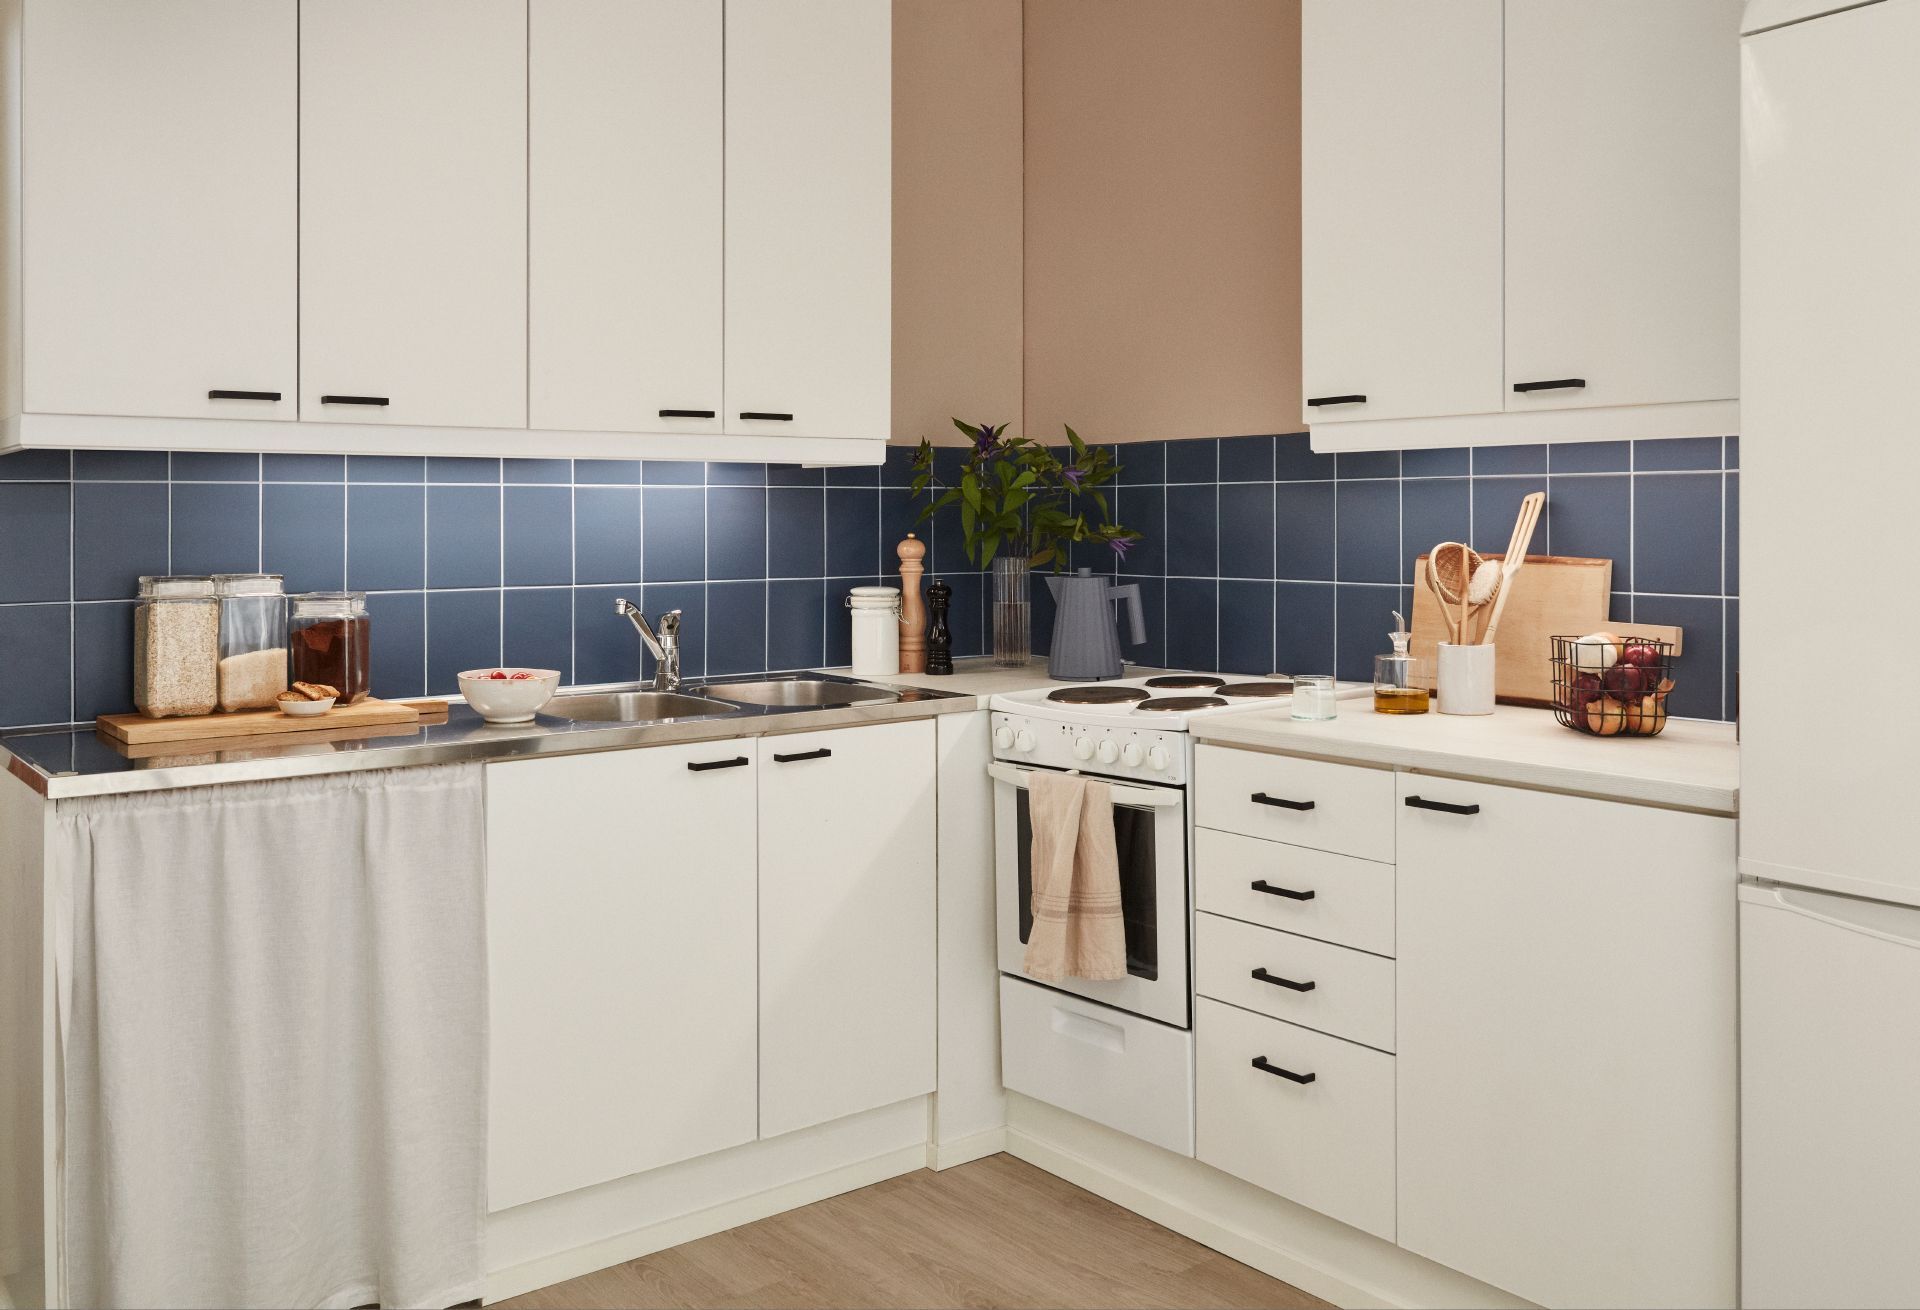 white kitchen with blue colour painted backsplash tiles